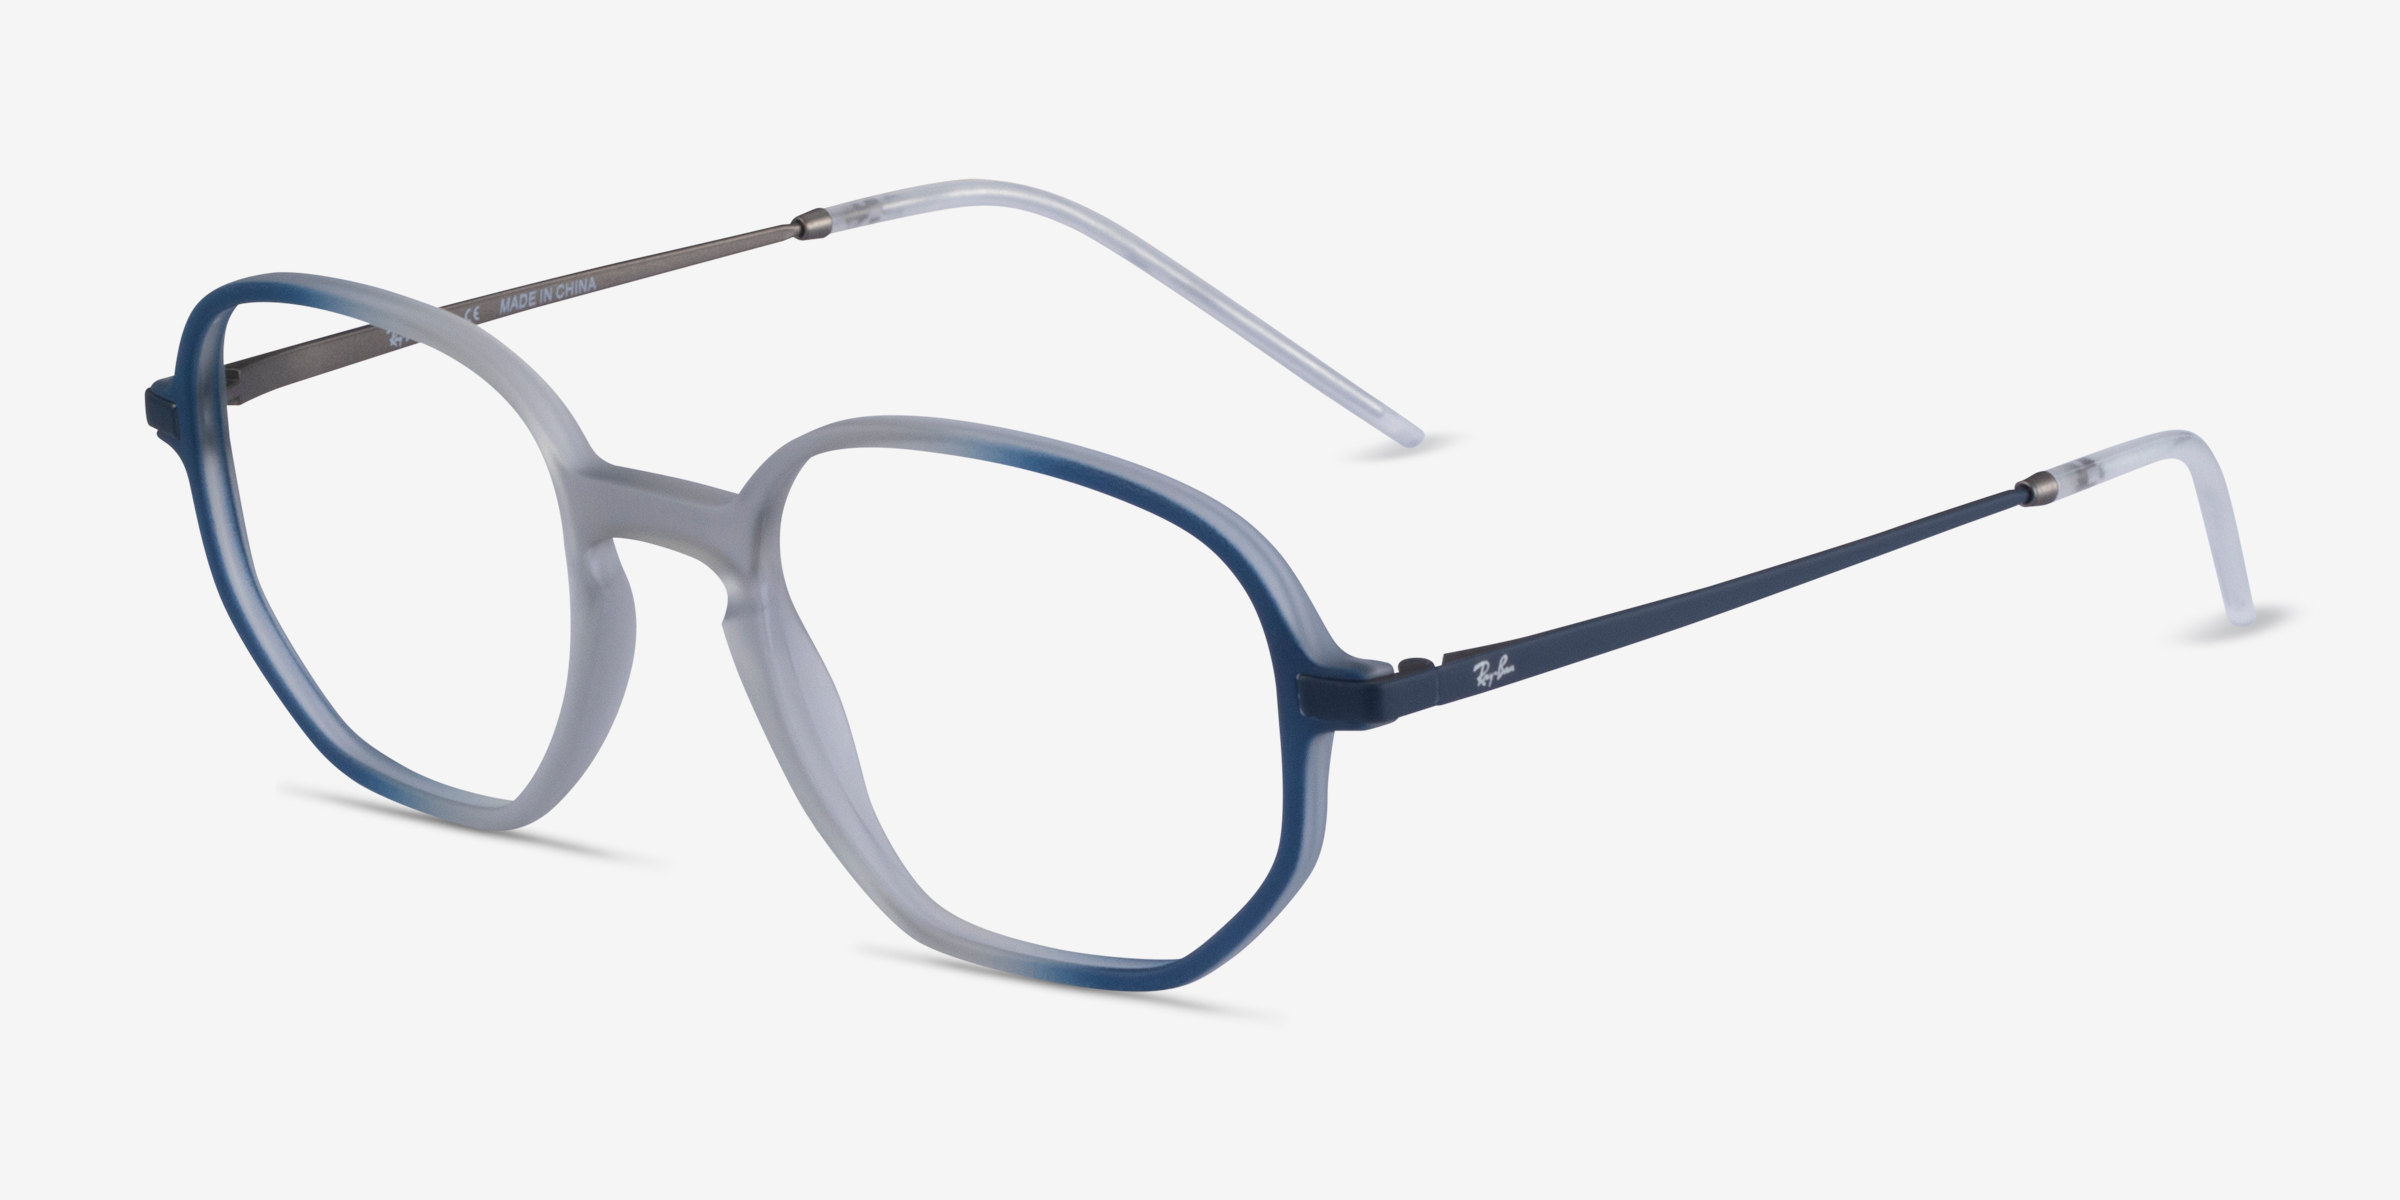 Ray-Ban RB7152 - Geometric Clear Blue Frame Eyeglasses | Eyebuydirect